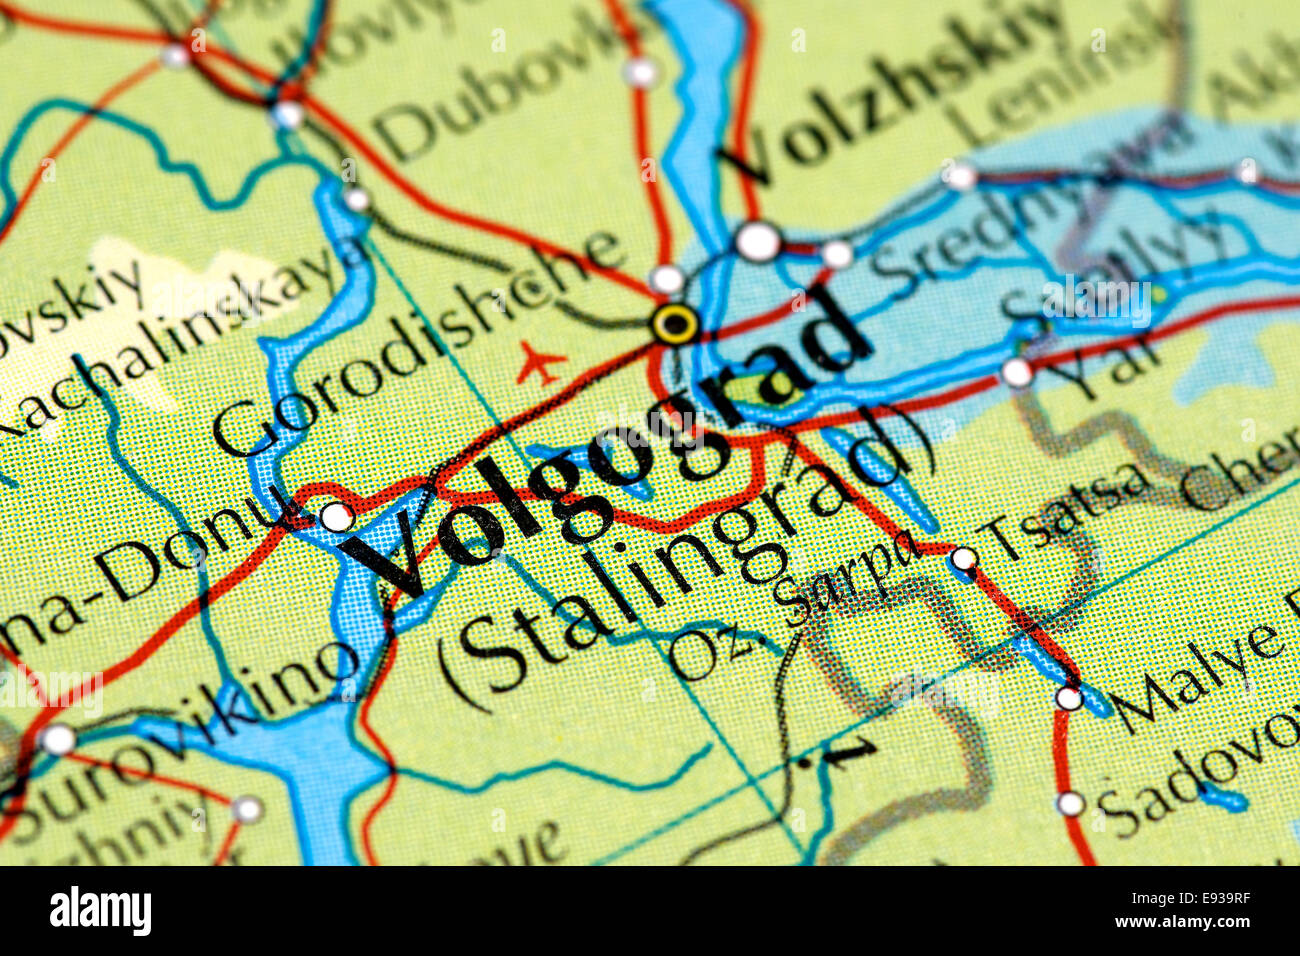 Map close up of Volgograd / Stalingrad, Russia Stock Photo - Alamy